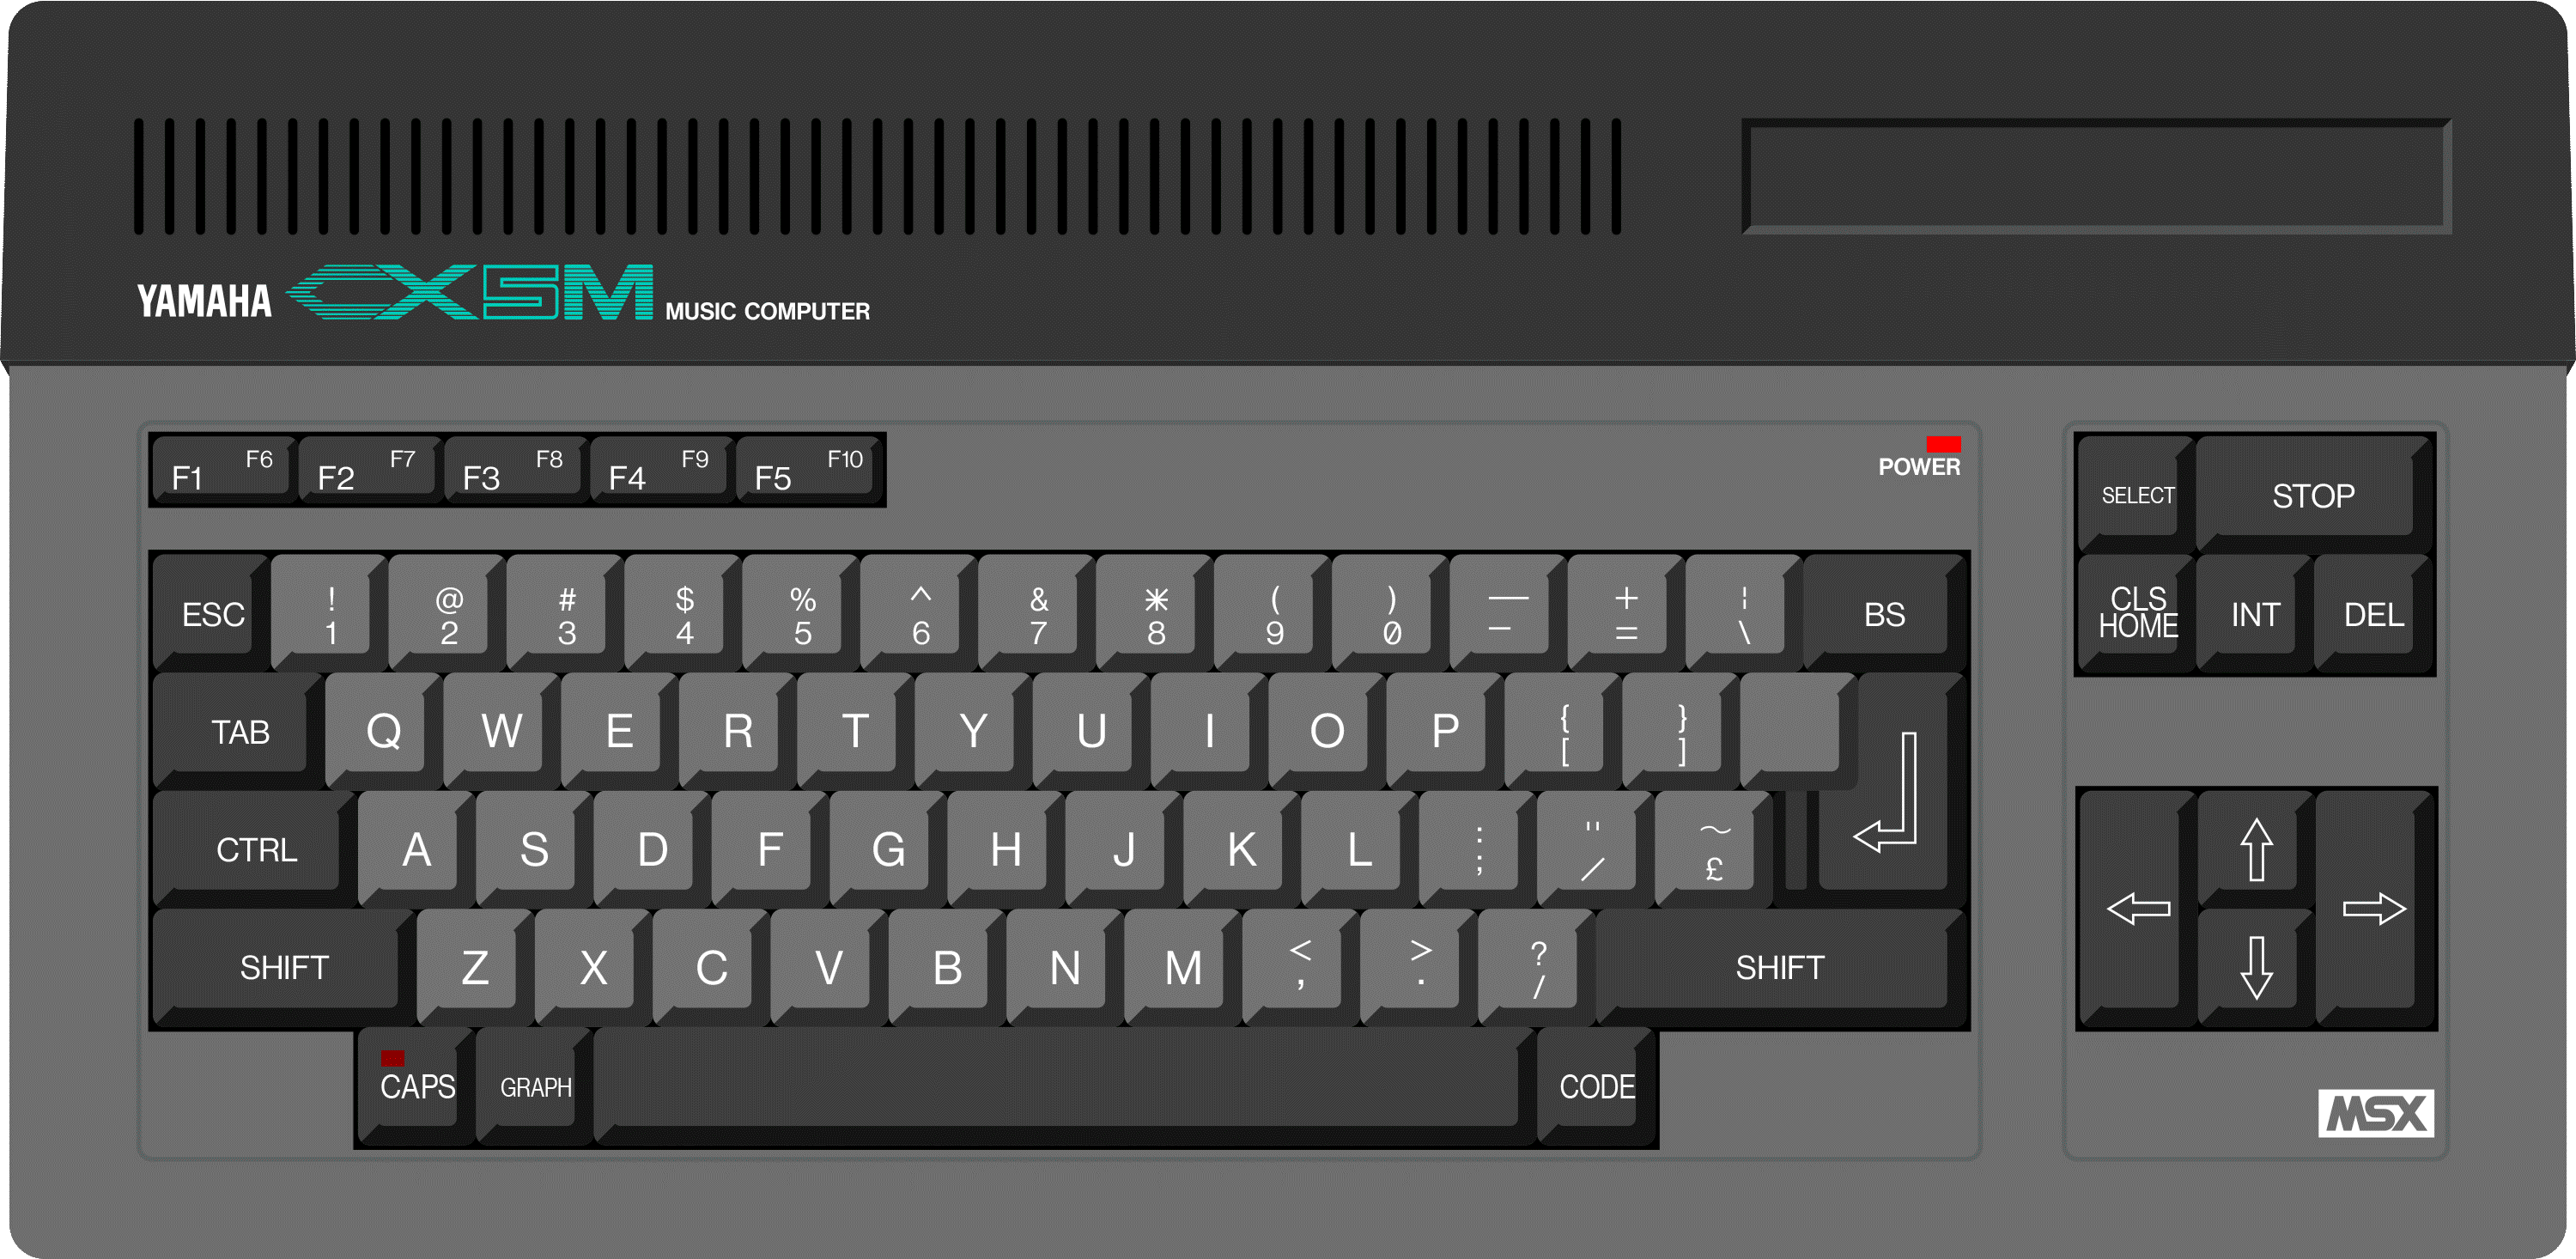 Yamaha CX5M home computer MSX